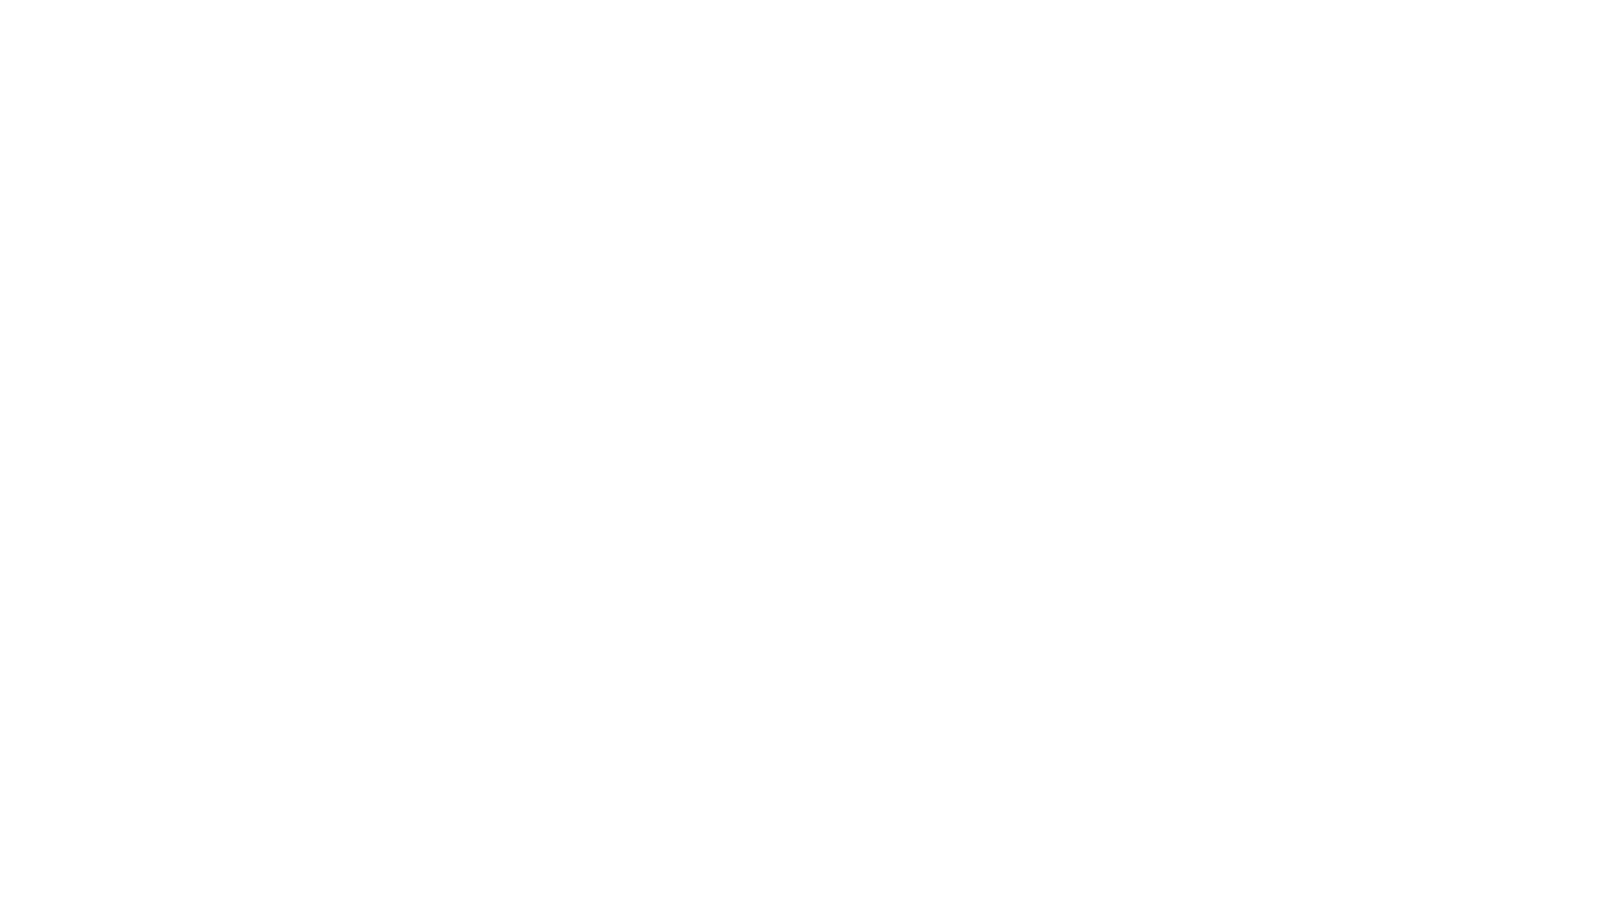 SIGNALS VOLUME 4
Mixed by Dave Matthias
House, Jackin' House, Deep House, Tech House
September 16th, 2022
https://davematthias.com

Track Listing:
1. Pansil - Salsa
2. Barry Obezz - Oldskool Vibe
3. Virak & TCKS - Siento Libre
4. Ssol & Jesse Jonez - Puerto Rico
5. Mark Knight & Armand Van Helden - The Music Began To Play
6. Kristine W - Can't Look Back
7. Billen Ted & Shift K3Y - Step Correct
8. Mack & Diesel x Back 'n Fourth - Puppet
9. Blond:ish, Francis Mercier, Amadou & Mariam - Seté
10. Karen Harding - Other Side Of Love
11. 2drunk2funk - Everthing I Will Ever Need
12. Alesso & Zara Larsson - Words
13. France Joli - Let Me Love You
14. Dallerium - Lift Me Up
15. Hugel & Damien N'Drix - Tengo Ganas De Ti
16. Jolyon Petch & Starley - I Just Want Your Touch

Free download on Soundcloud:
https://soundcloud.com/davematthias

Available on all your favorite podcast platforms:

Official site:
https://davematthias.com

Soundcloud:
https://soundcloud.com/davematthias/tracks

Mixcloud:
https://www.mixcloud.com/davematthias/

Apple Podcasts:
https://podcasts.apple.com/podcast/dave-matthias/id179235600?mt=2

Amazon Music Podcasts:
https://music.amazon.com/podcasts/b198fcc7-5947-4643-baf3-30a0fb102ba9/dave-matthias

Google Podcasts:
https://podcasts.google.com/feed/aHR0cHM6Ly9mZWVkcy5zb3VuZGNsb3VkLmNvbS91c2Vycy9zb3VuZGNsb3VkOnVzZXJzOjc0NjM5Ni9zb3VuZHMucnNz

Stitcher Podcasts:
https://www.stitcher.com/show/dave-matthias-house-club-mixes

Deezer Podcasts:
https://www.deezer.com/us/show/1032422

iHeart Radio Podcasts:
https://www.iheart.com/podcast/256-dave-matthias-30984612/

Radio.net:
https://getpodcast.com/podcast/dave-matthias

Podbay.fm:
https://podbay.fm/p/1019162964

#housemusic #techhouse #djmix